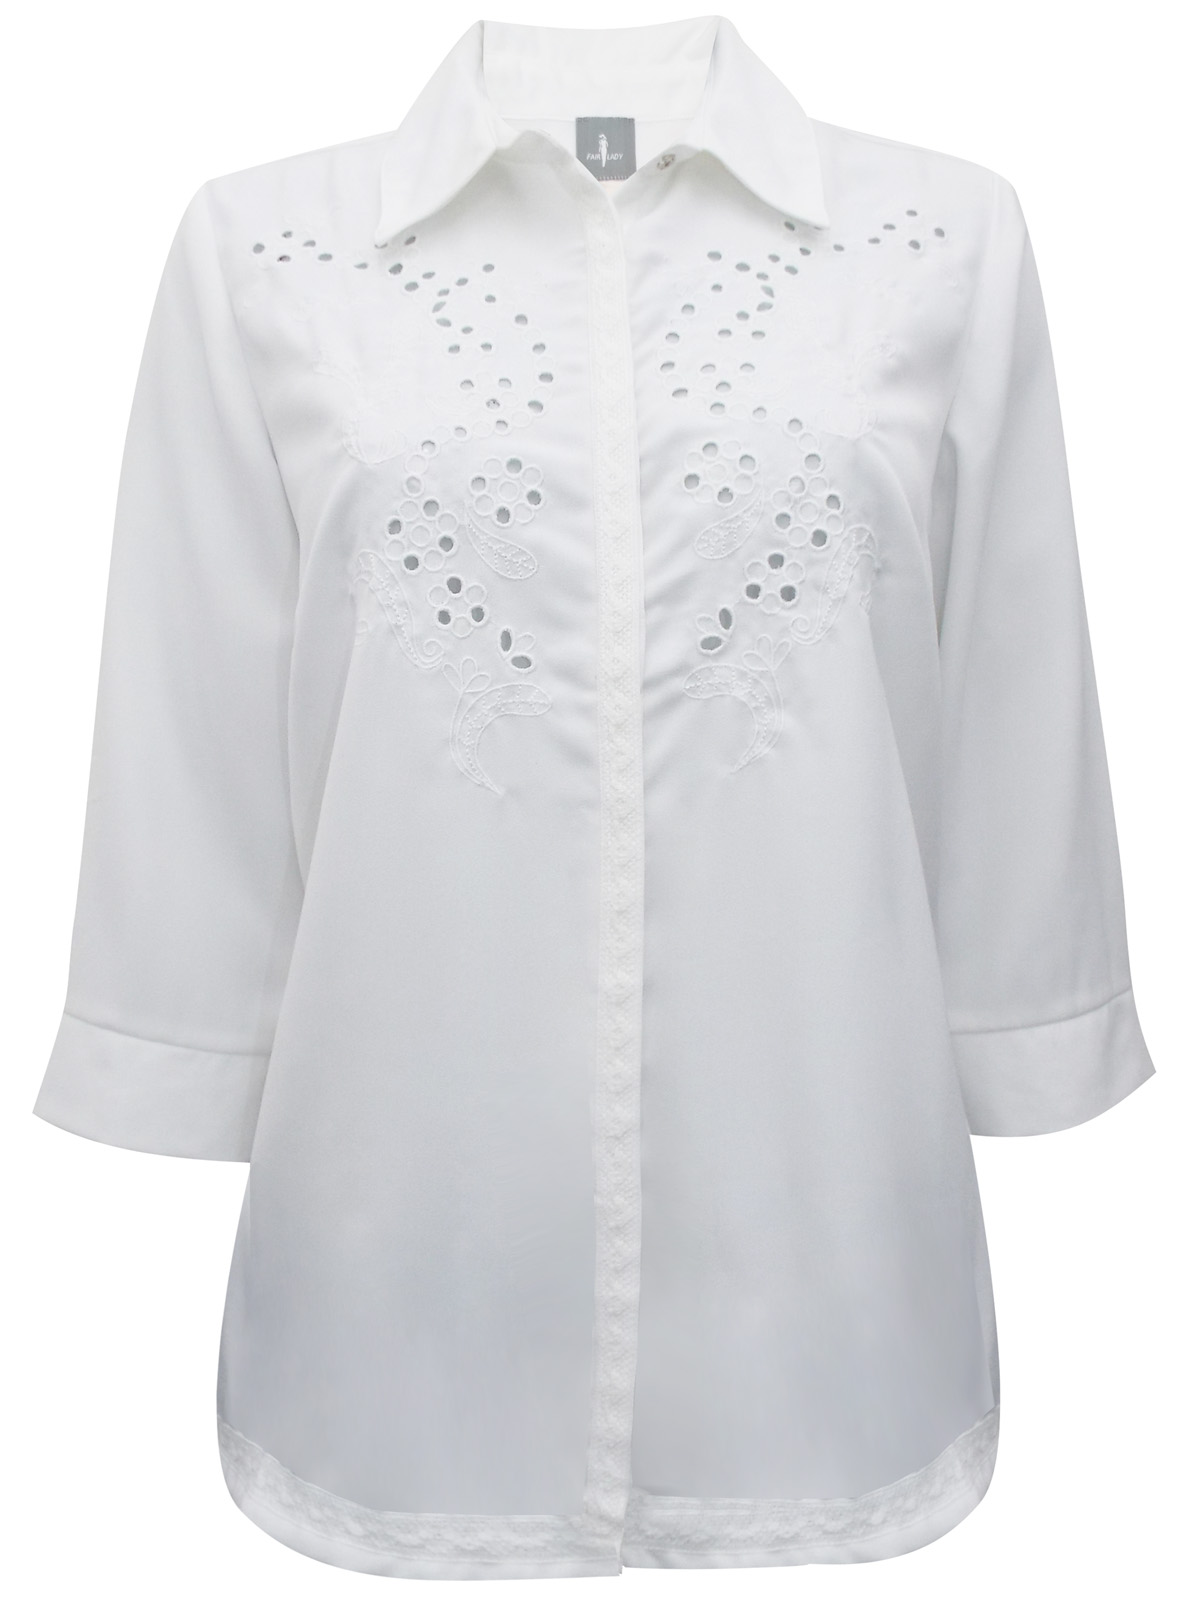 Fair Lady - - Fair Lady WHITE Cutwork Embroidered 3/4 Sleeve Shirt ...